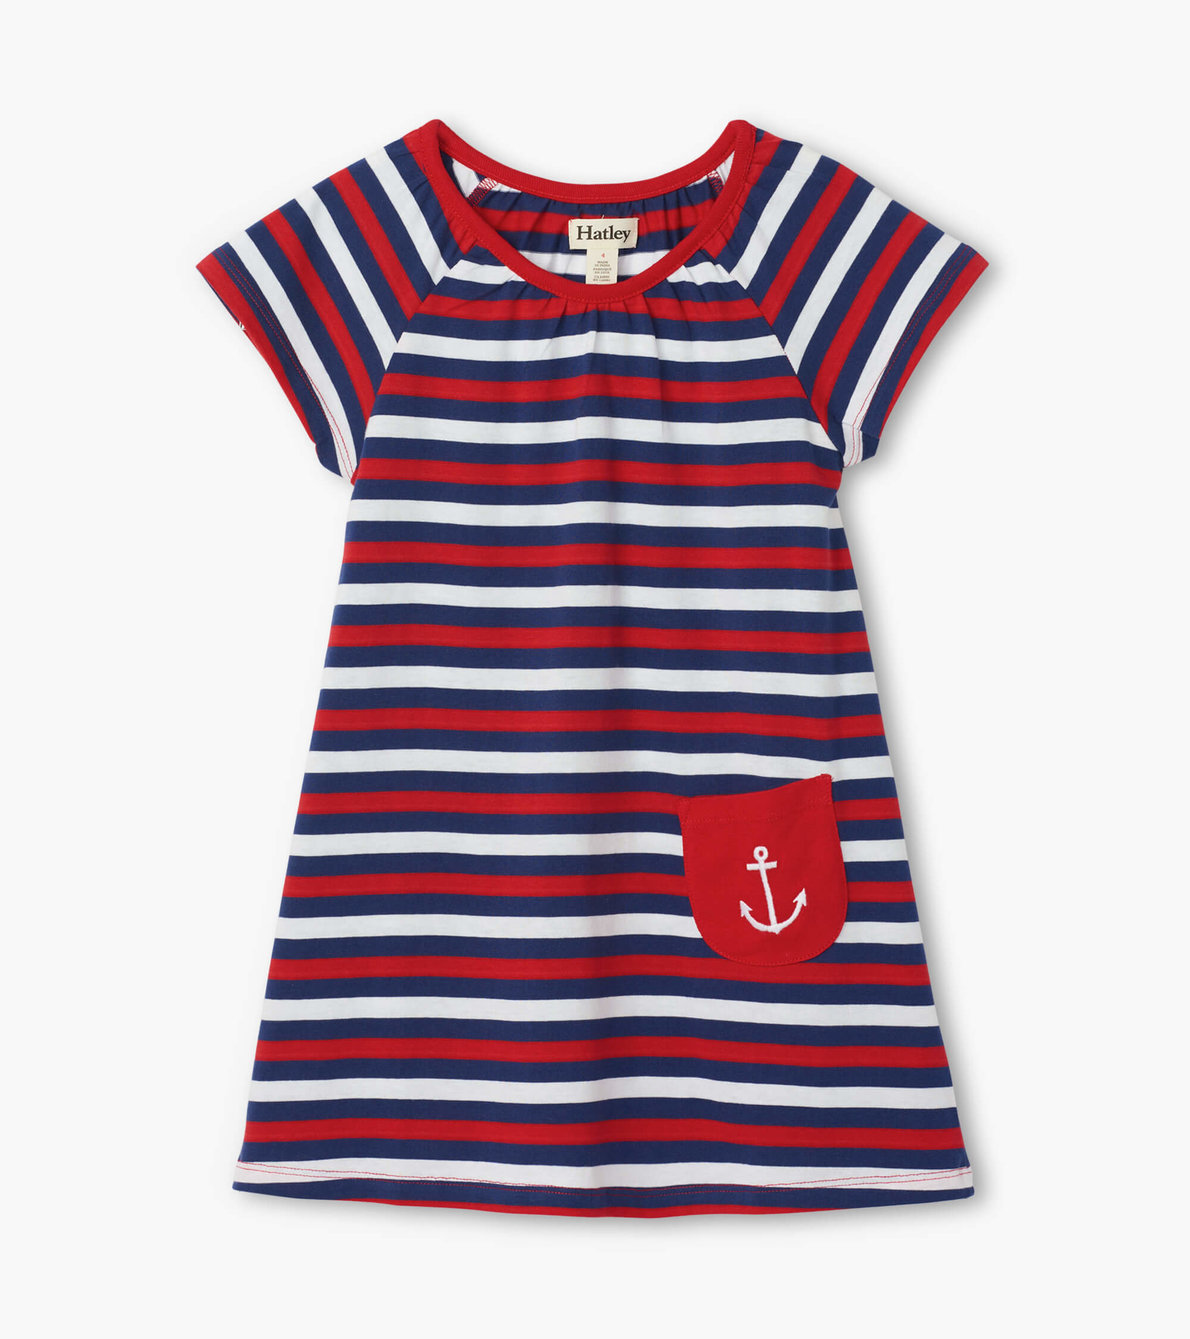 View larger image of Nautical Stripe Tee Shirt Dress